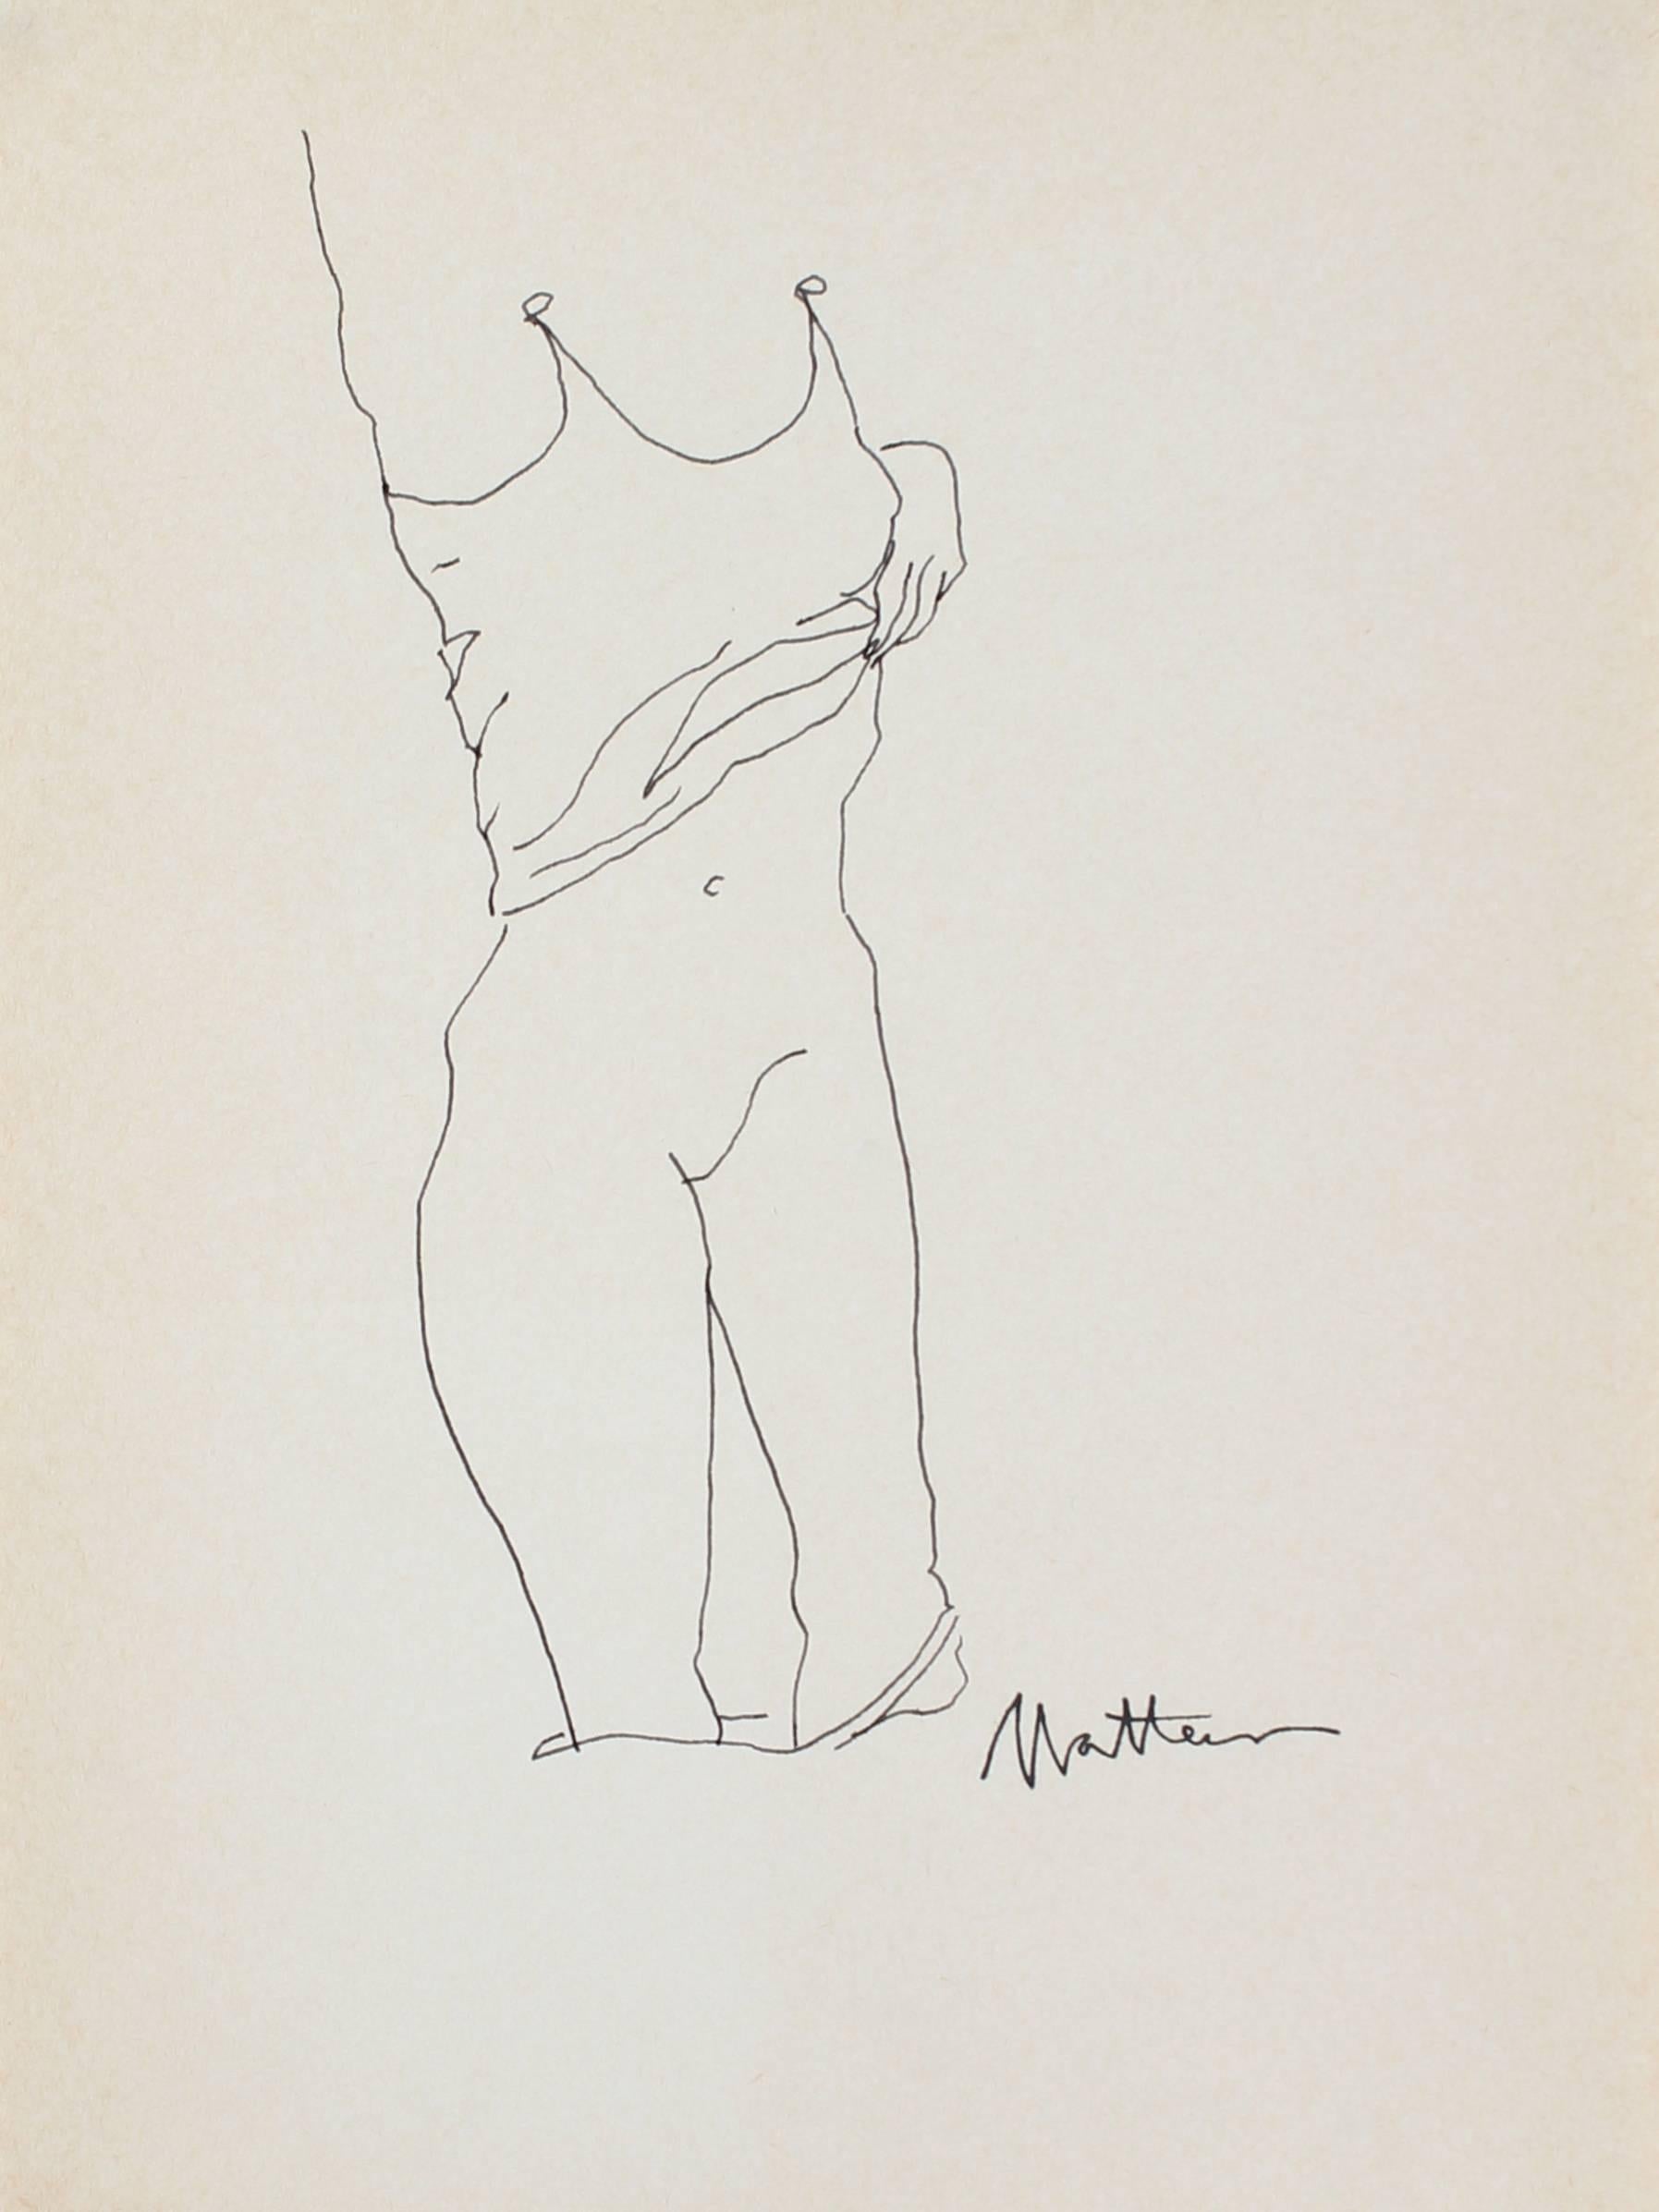 Rip Matteson Nude - Monochromatic Figure in Ink, 1989